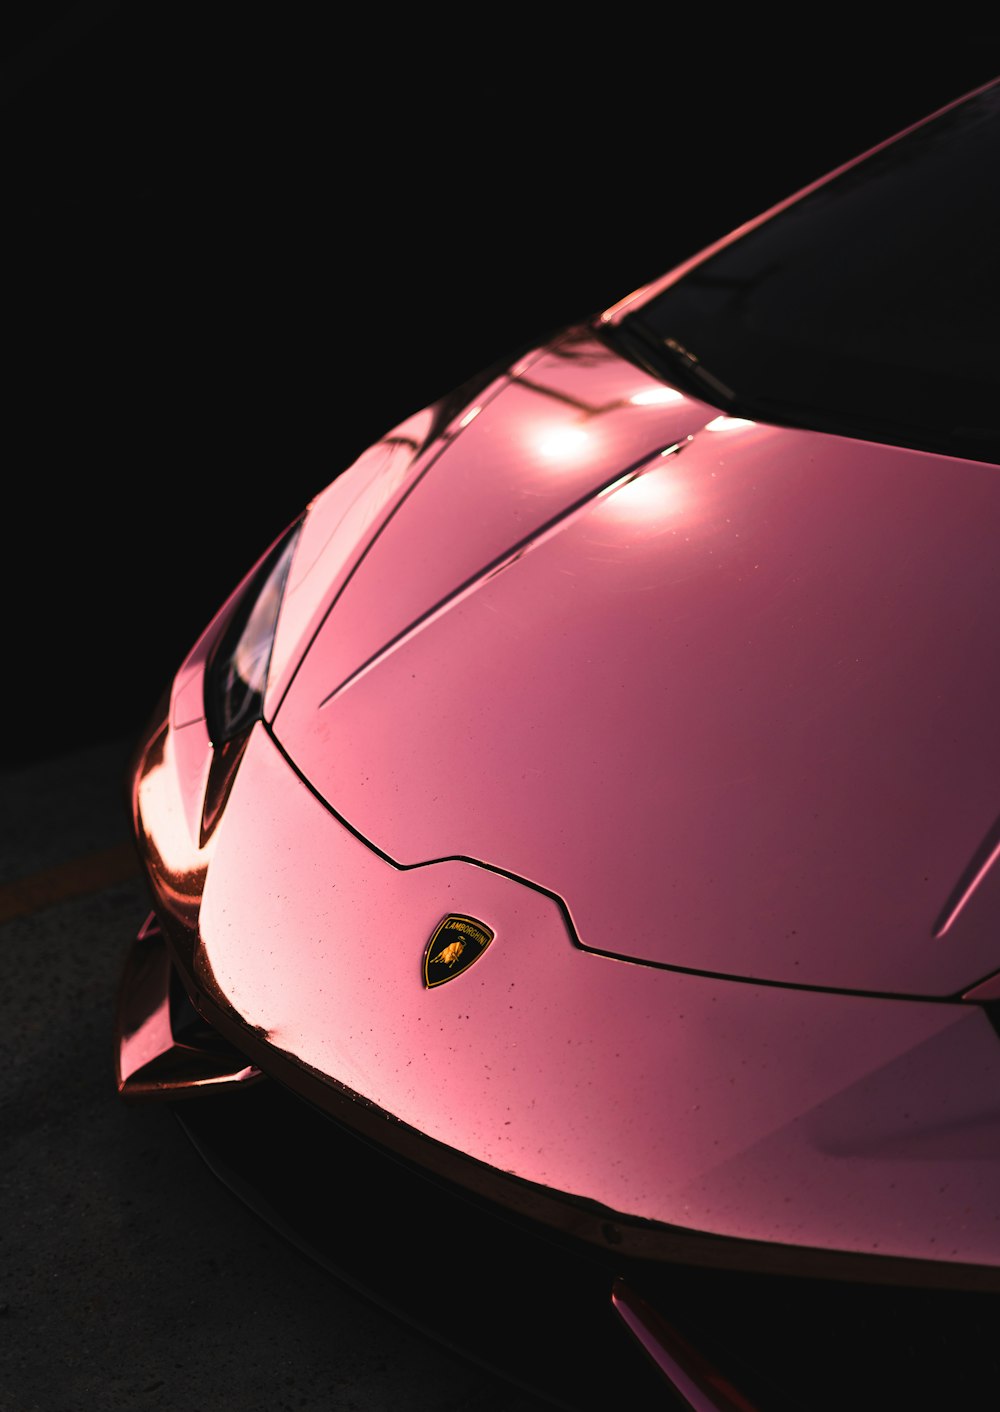 Pink Car Pictures | Download Free Images on Unsplash